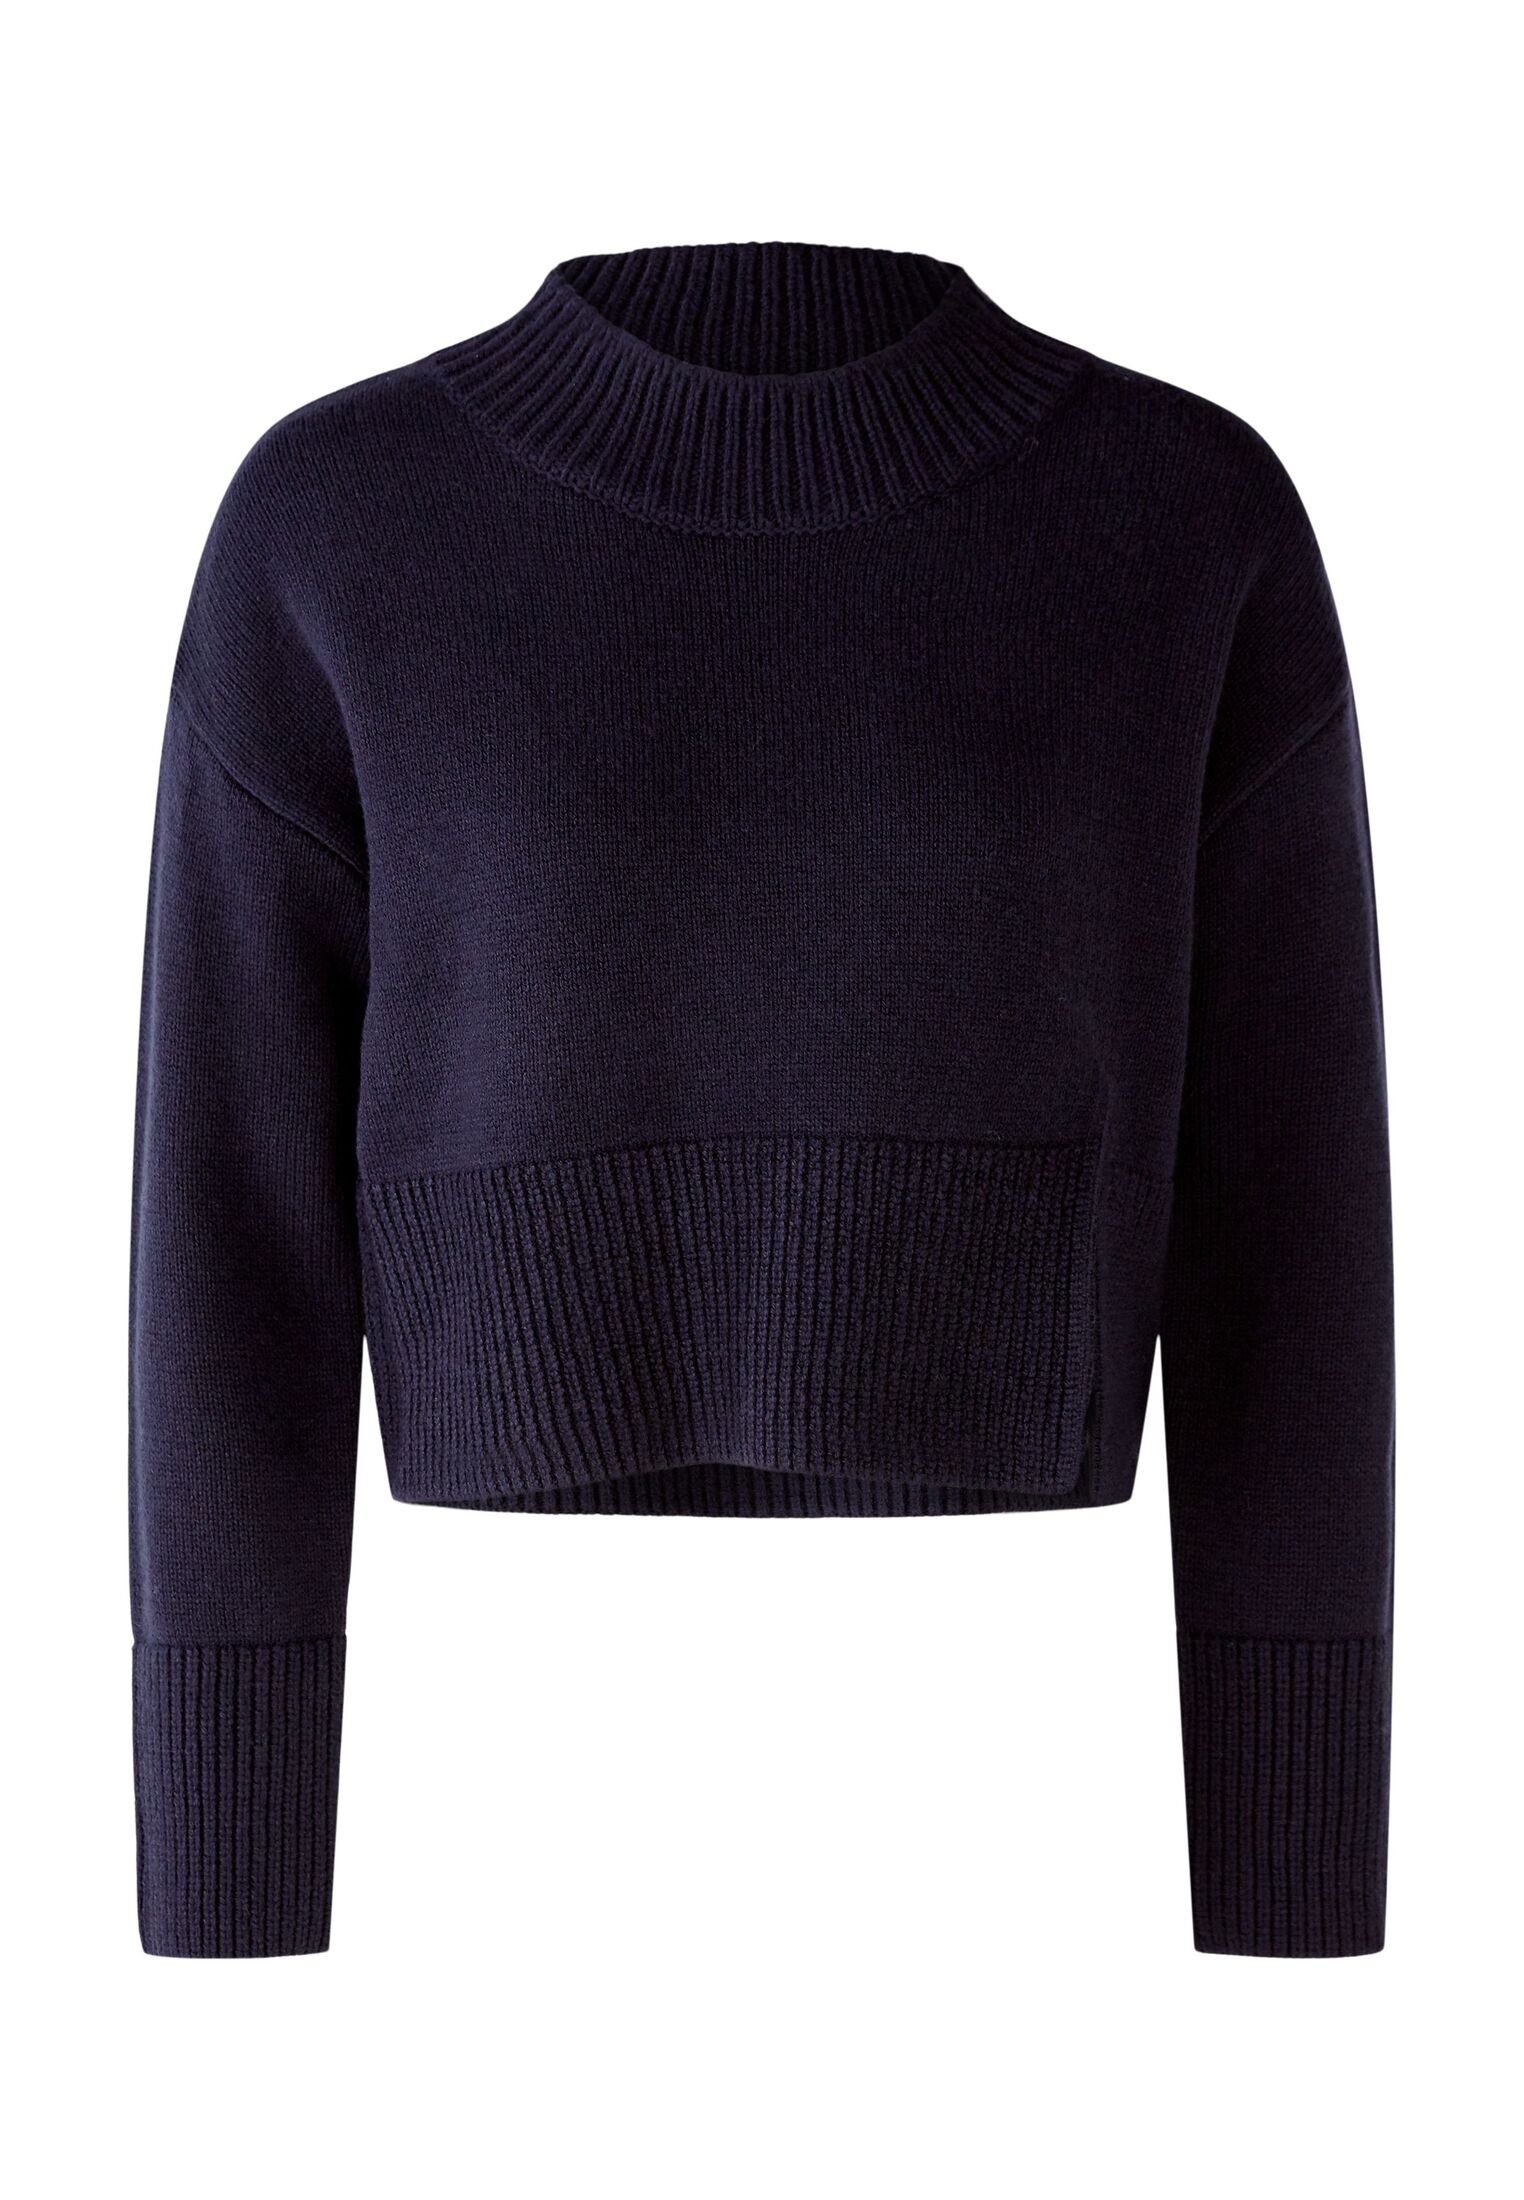 Oui Strickpullover Pullover Wollmischung darkblue | Longpullover